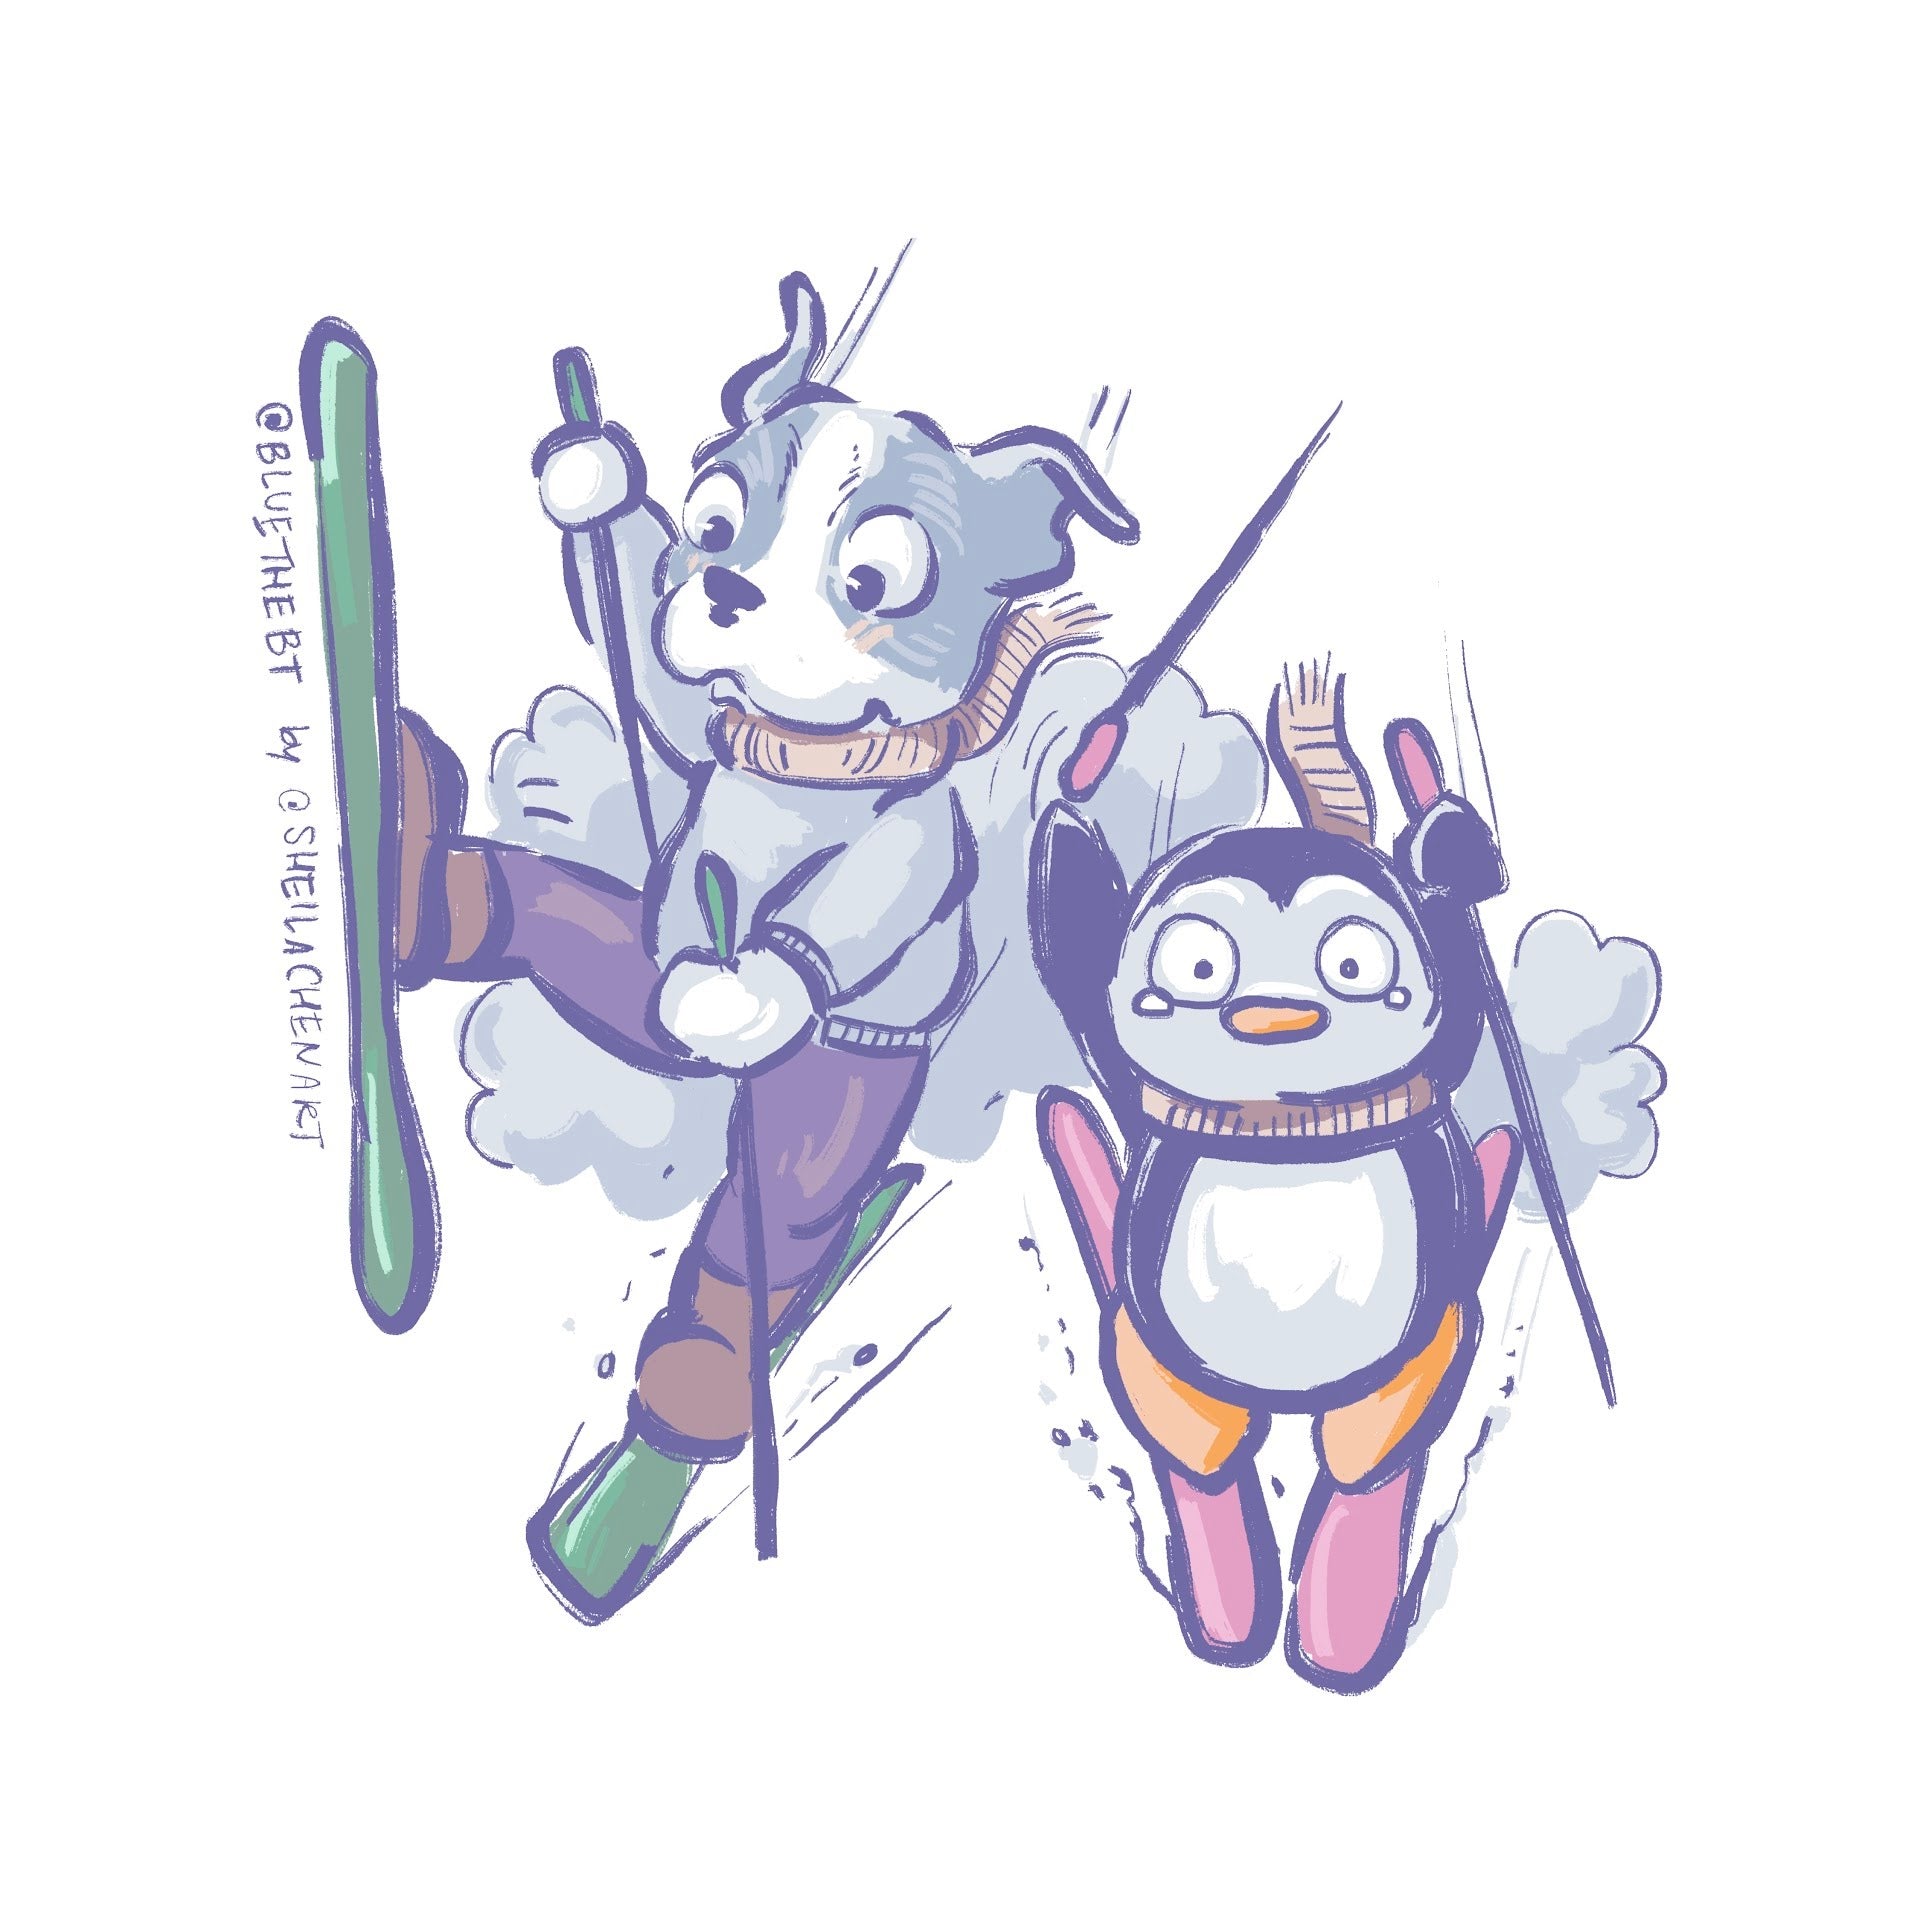 Penguin Skiing